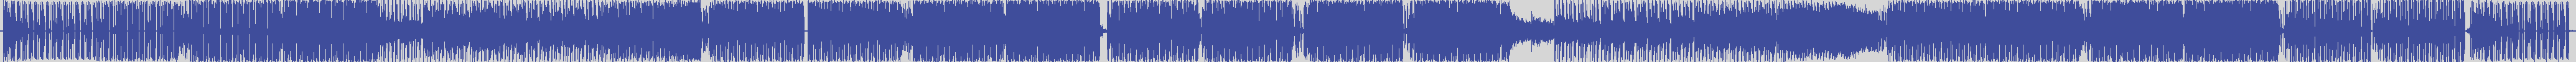 smilax_productions [SPMOL078] Takeshy Kurosawa, Gube - Wassup [Stylus Robb Remix] audio wave form